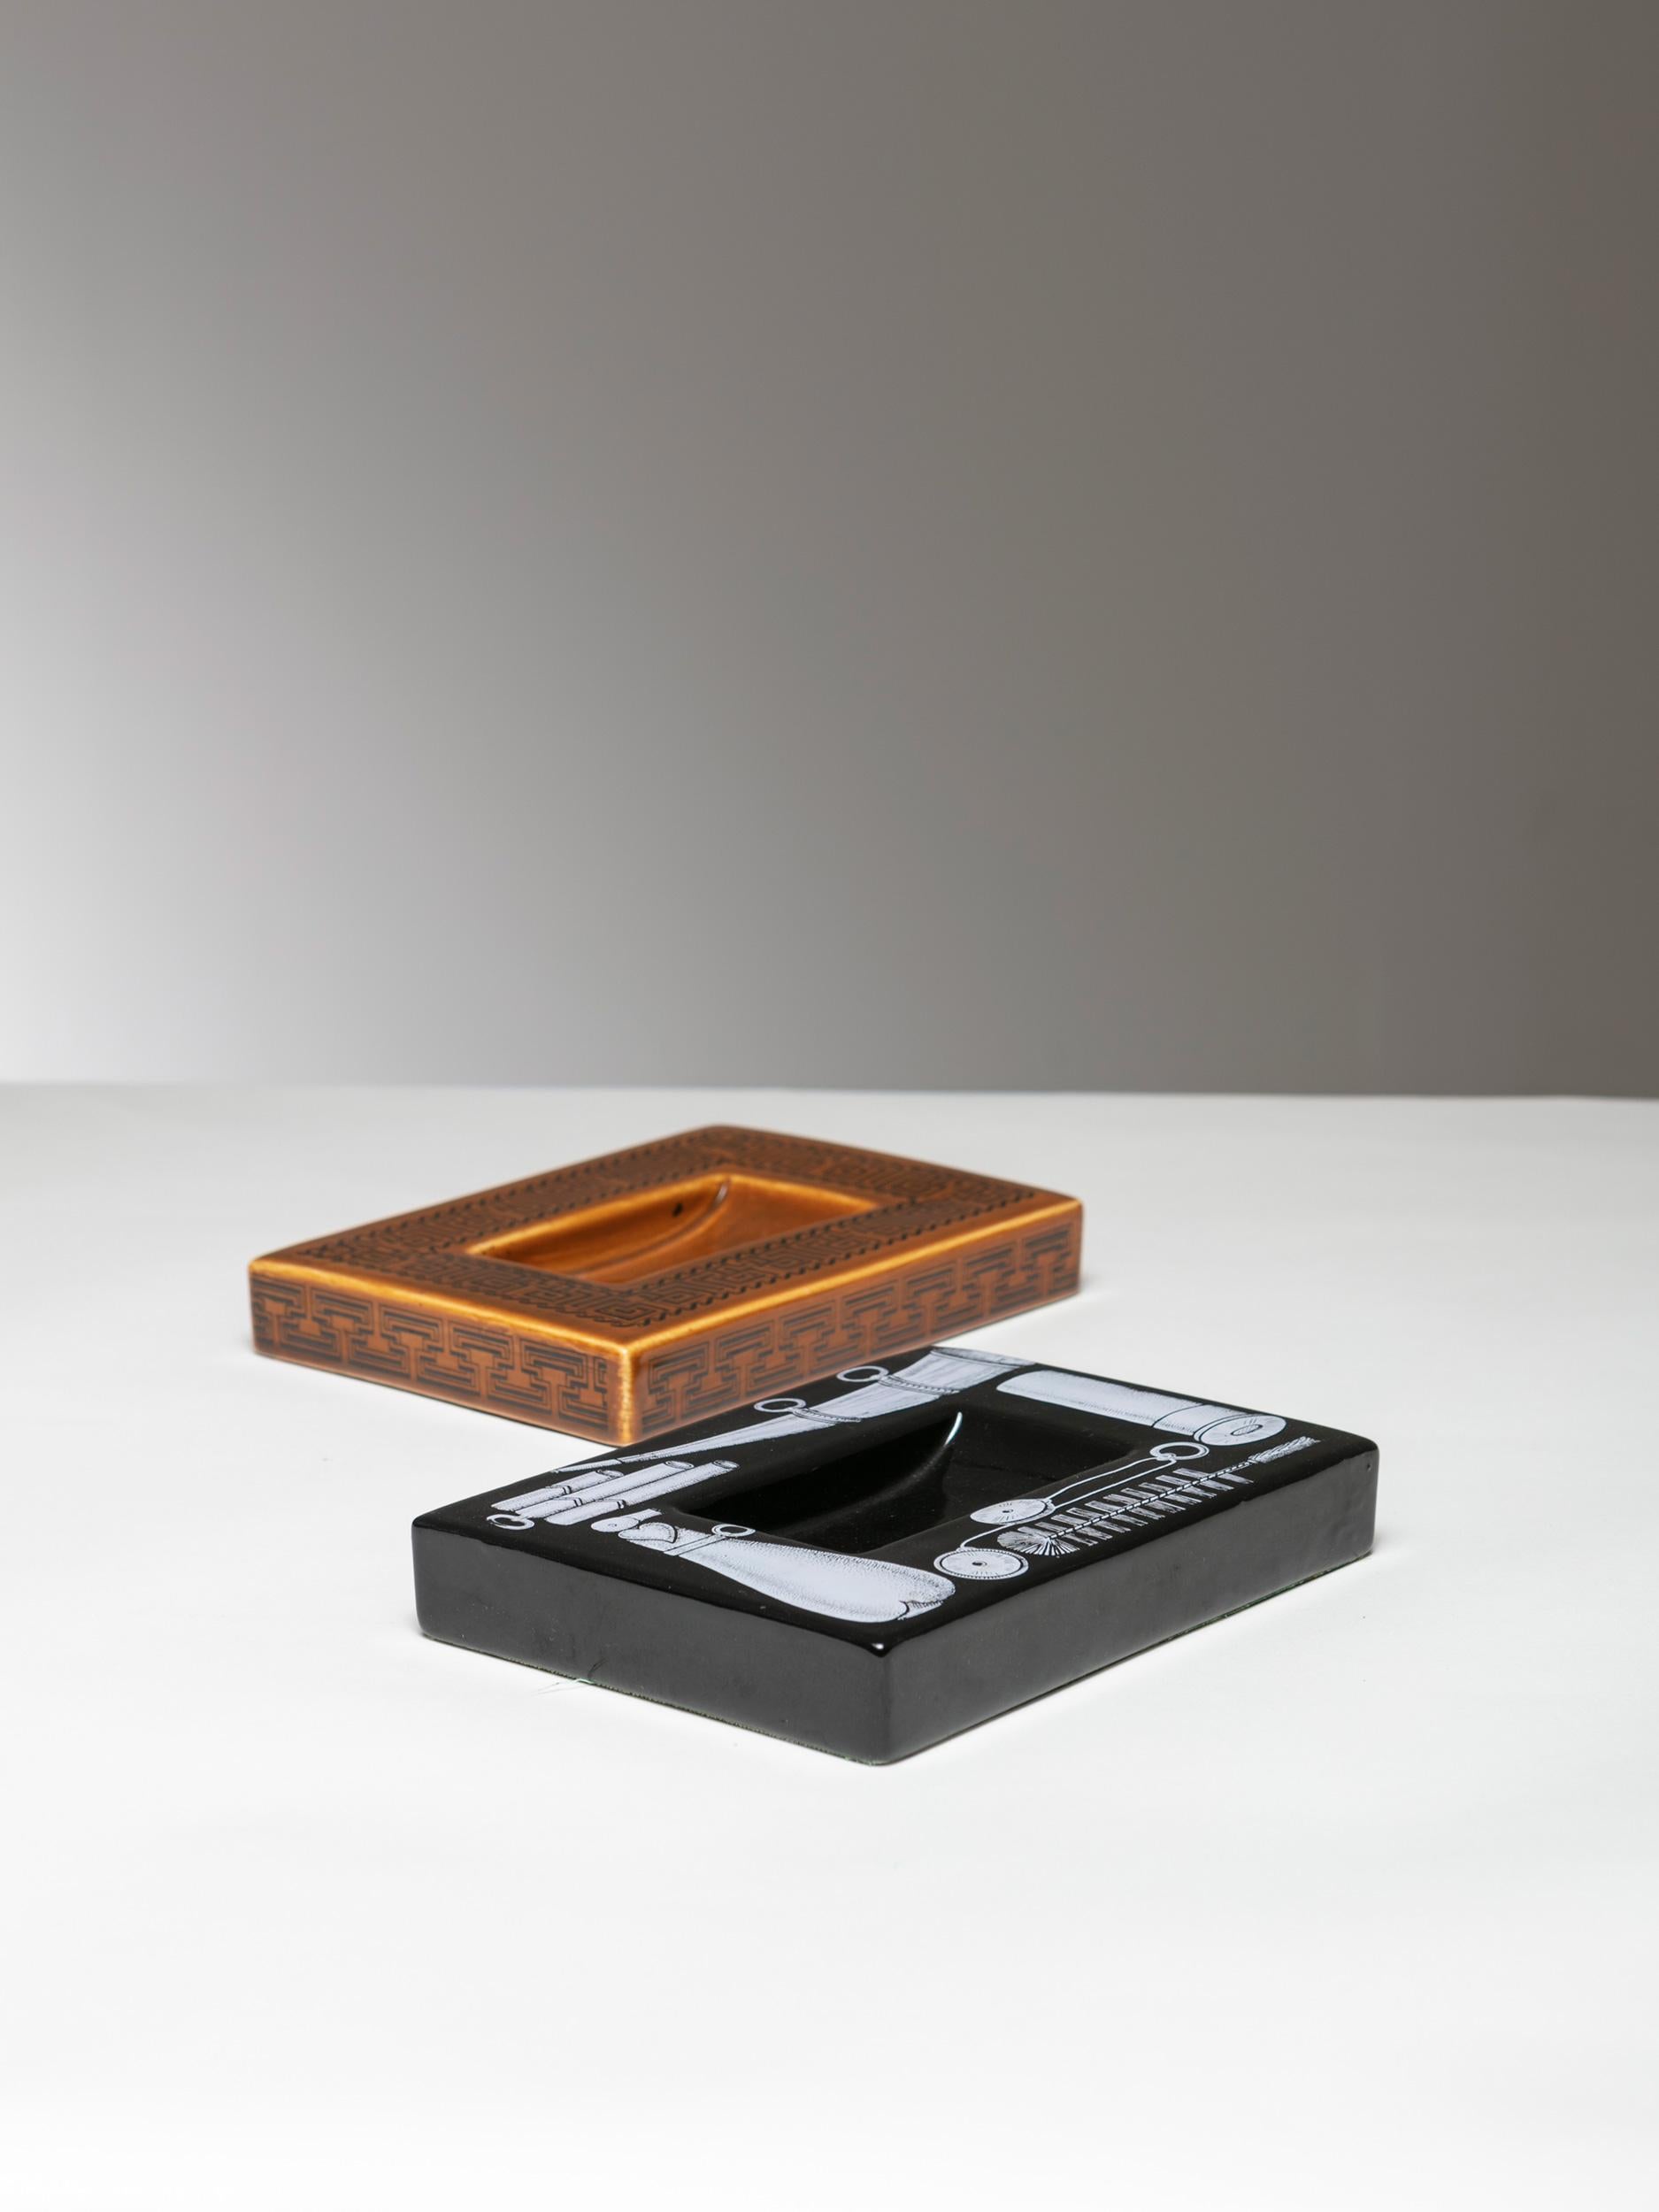 Rare set of two ceramic desk elements by Piero Fornasetti.